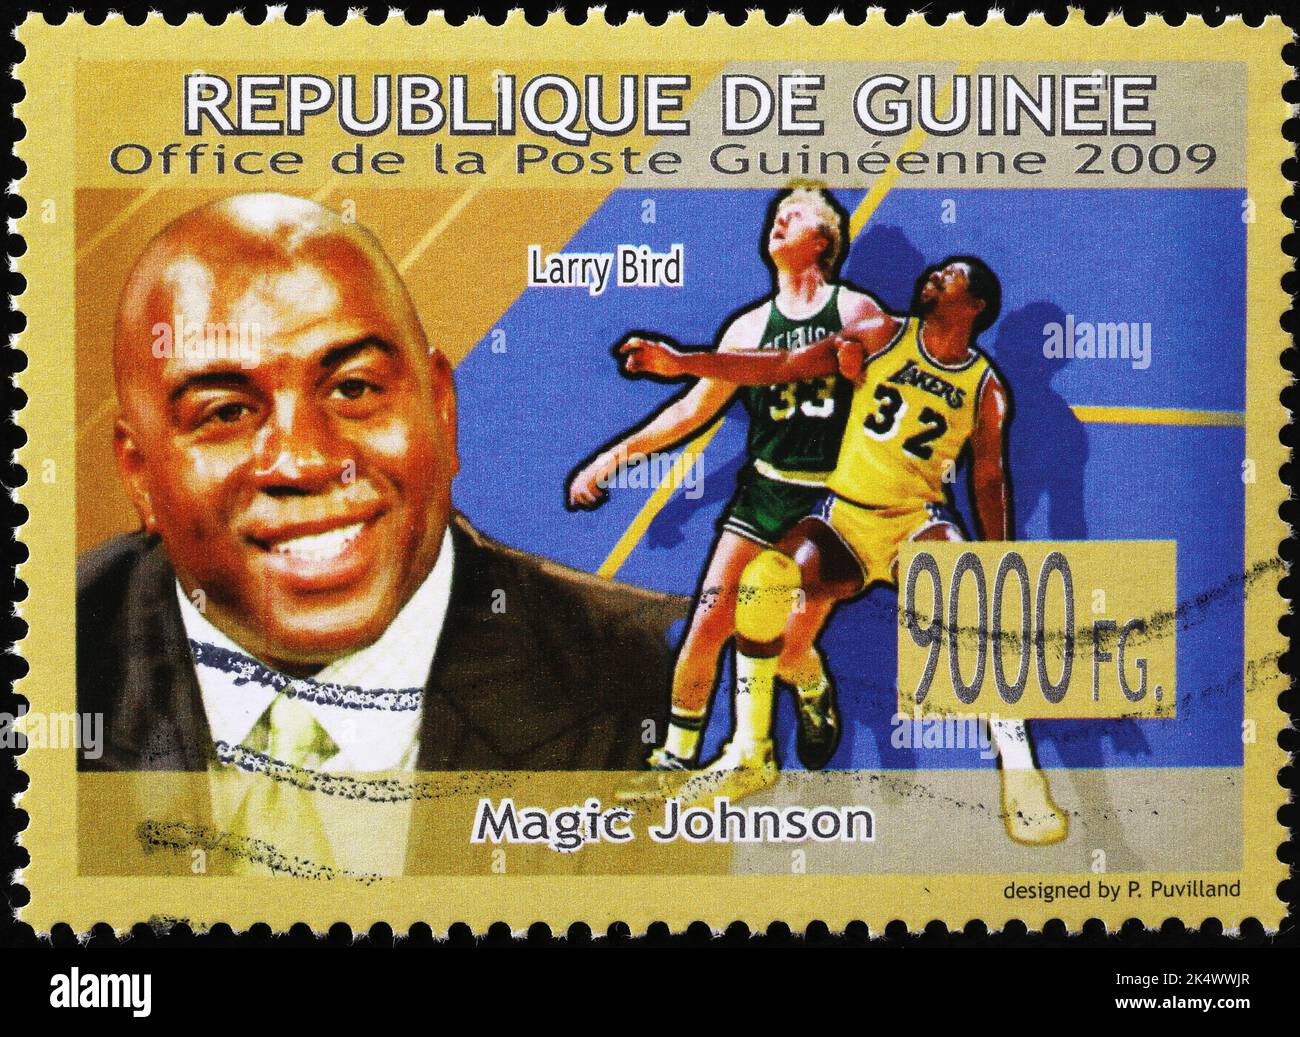 Magic Johnson and Larry Bird on postage stamp Stock Photo